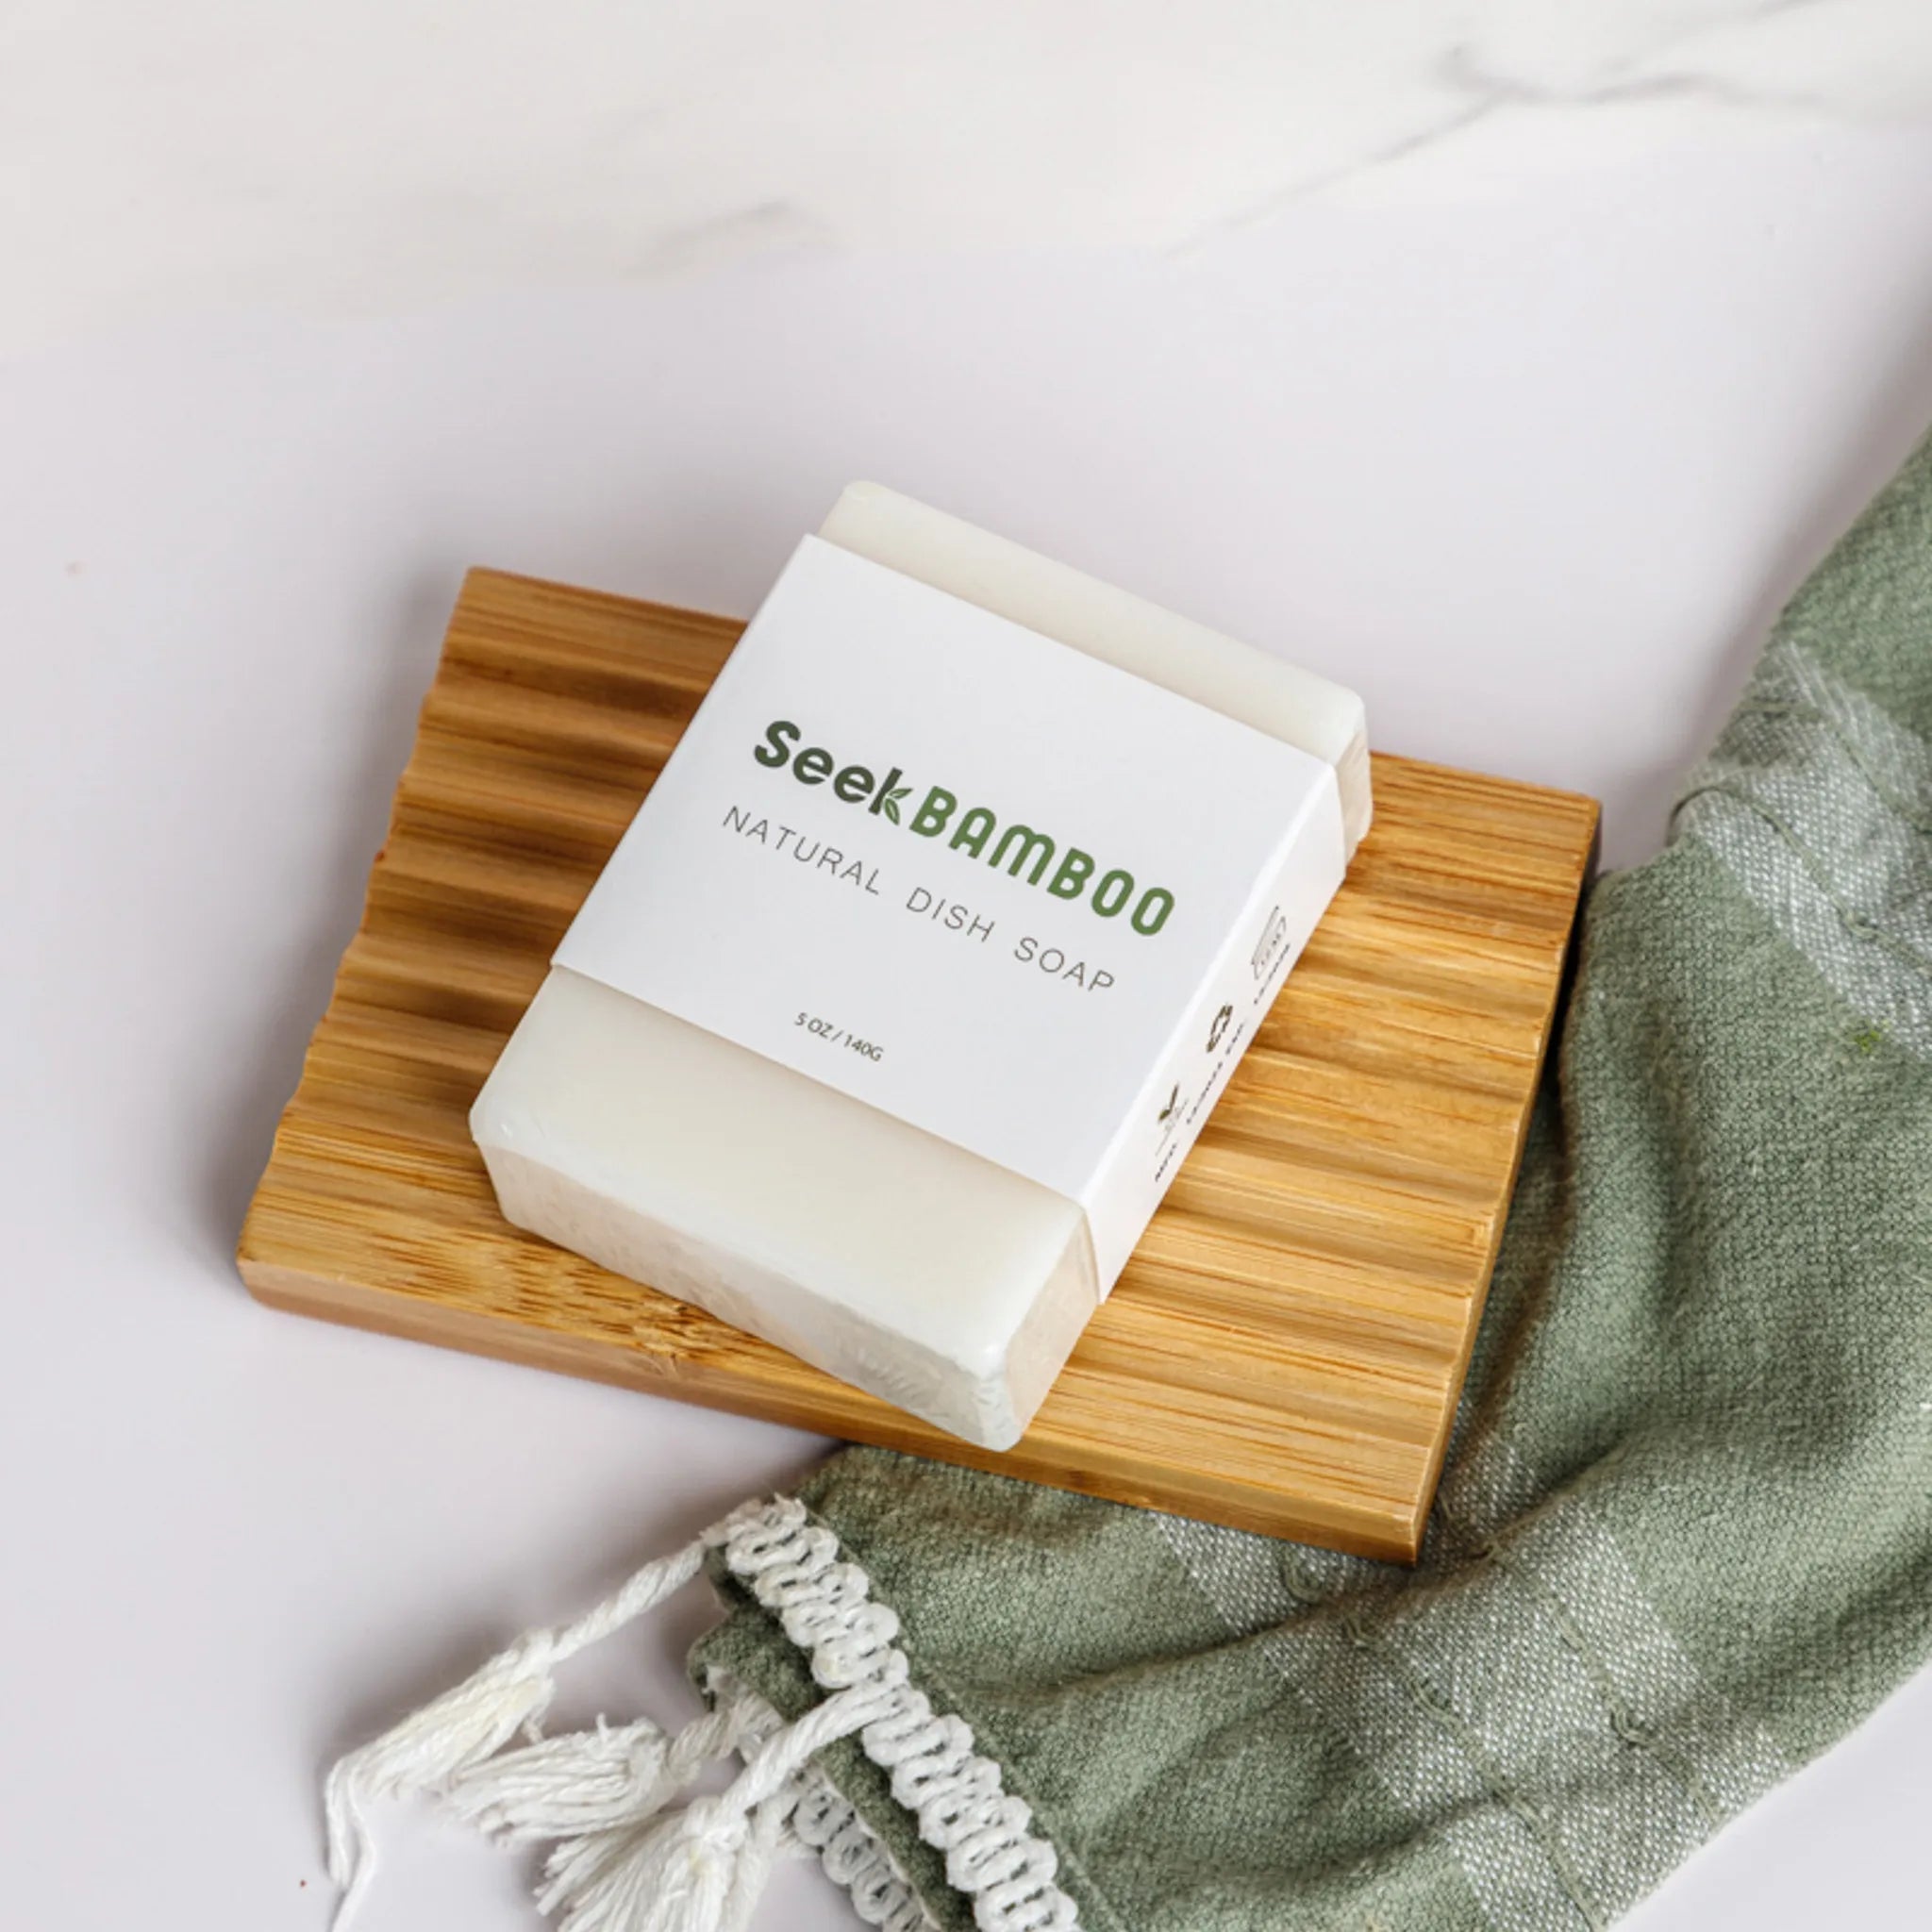 natural dish soap bar - seek bamboo